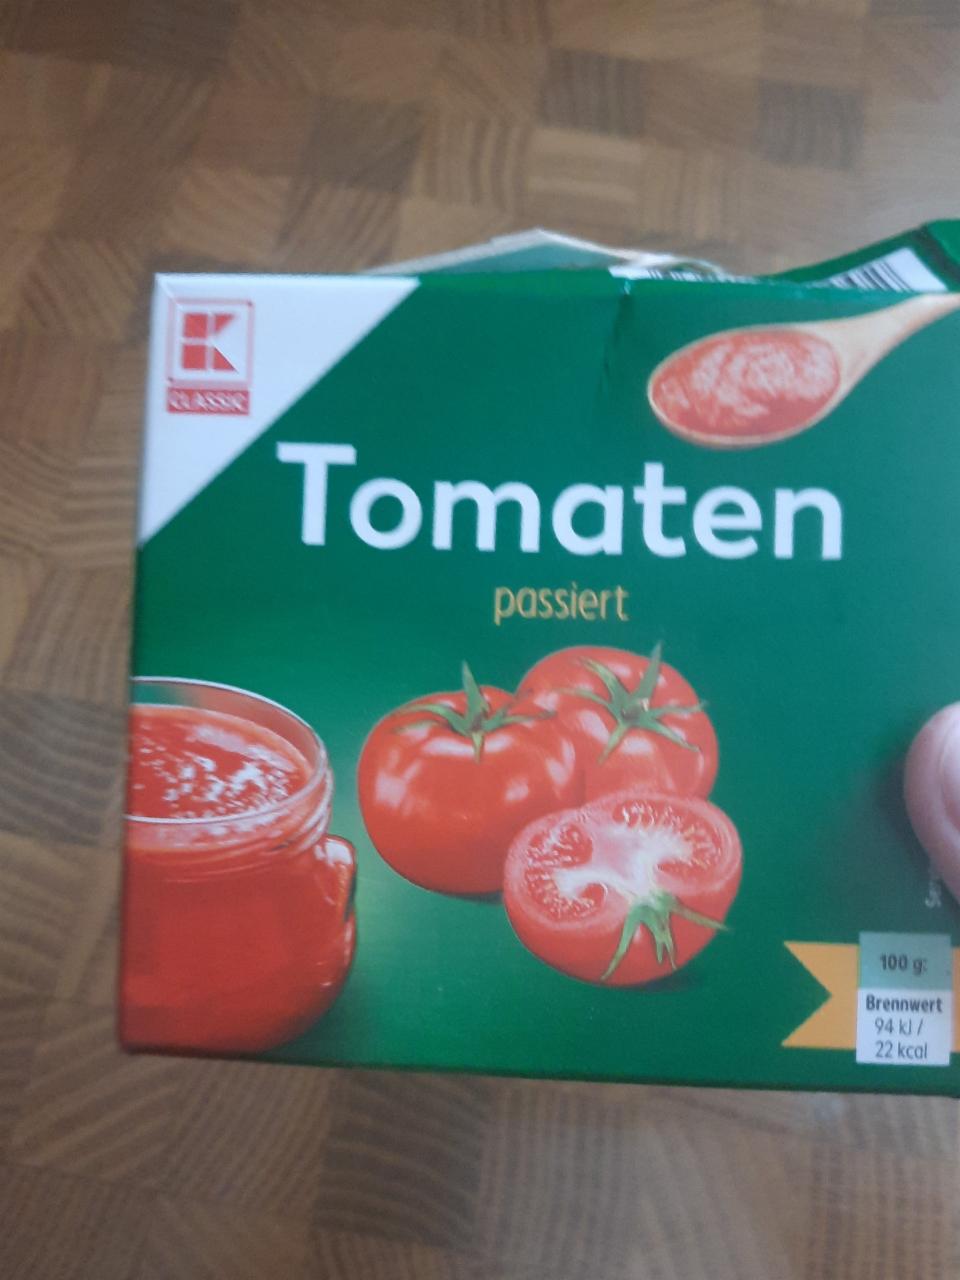 Фото - Tomaten passiert K-Classic